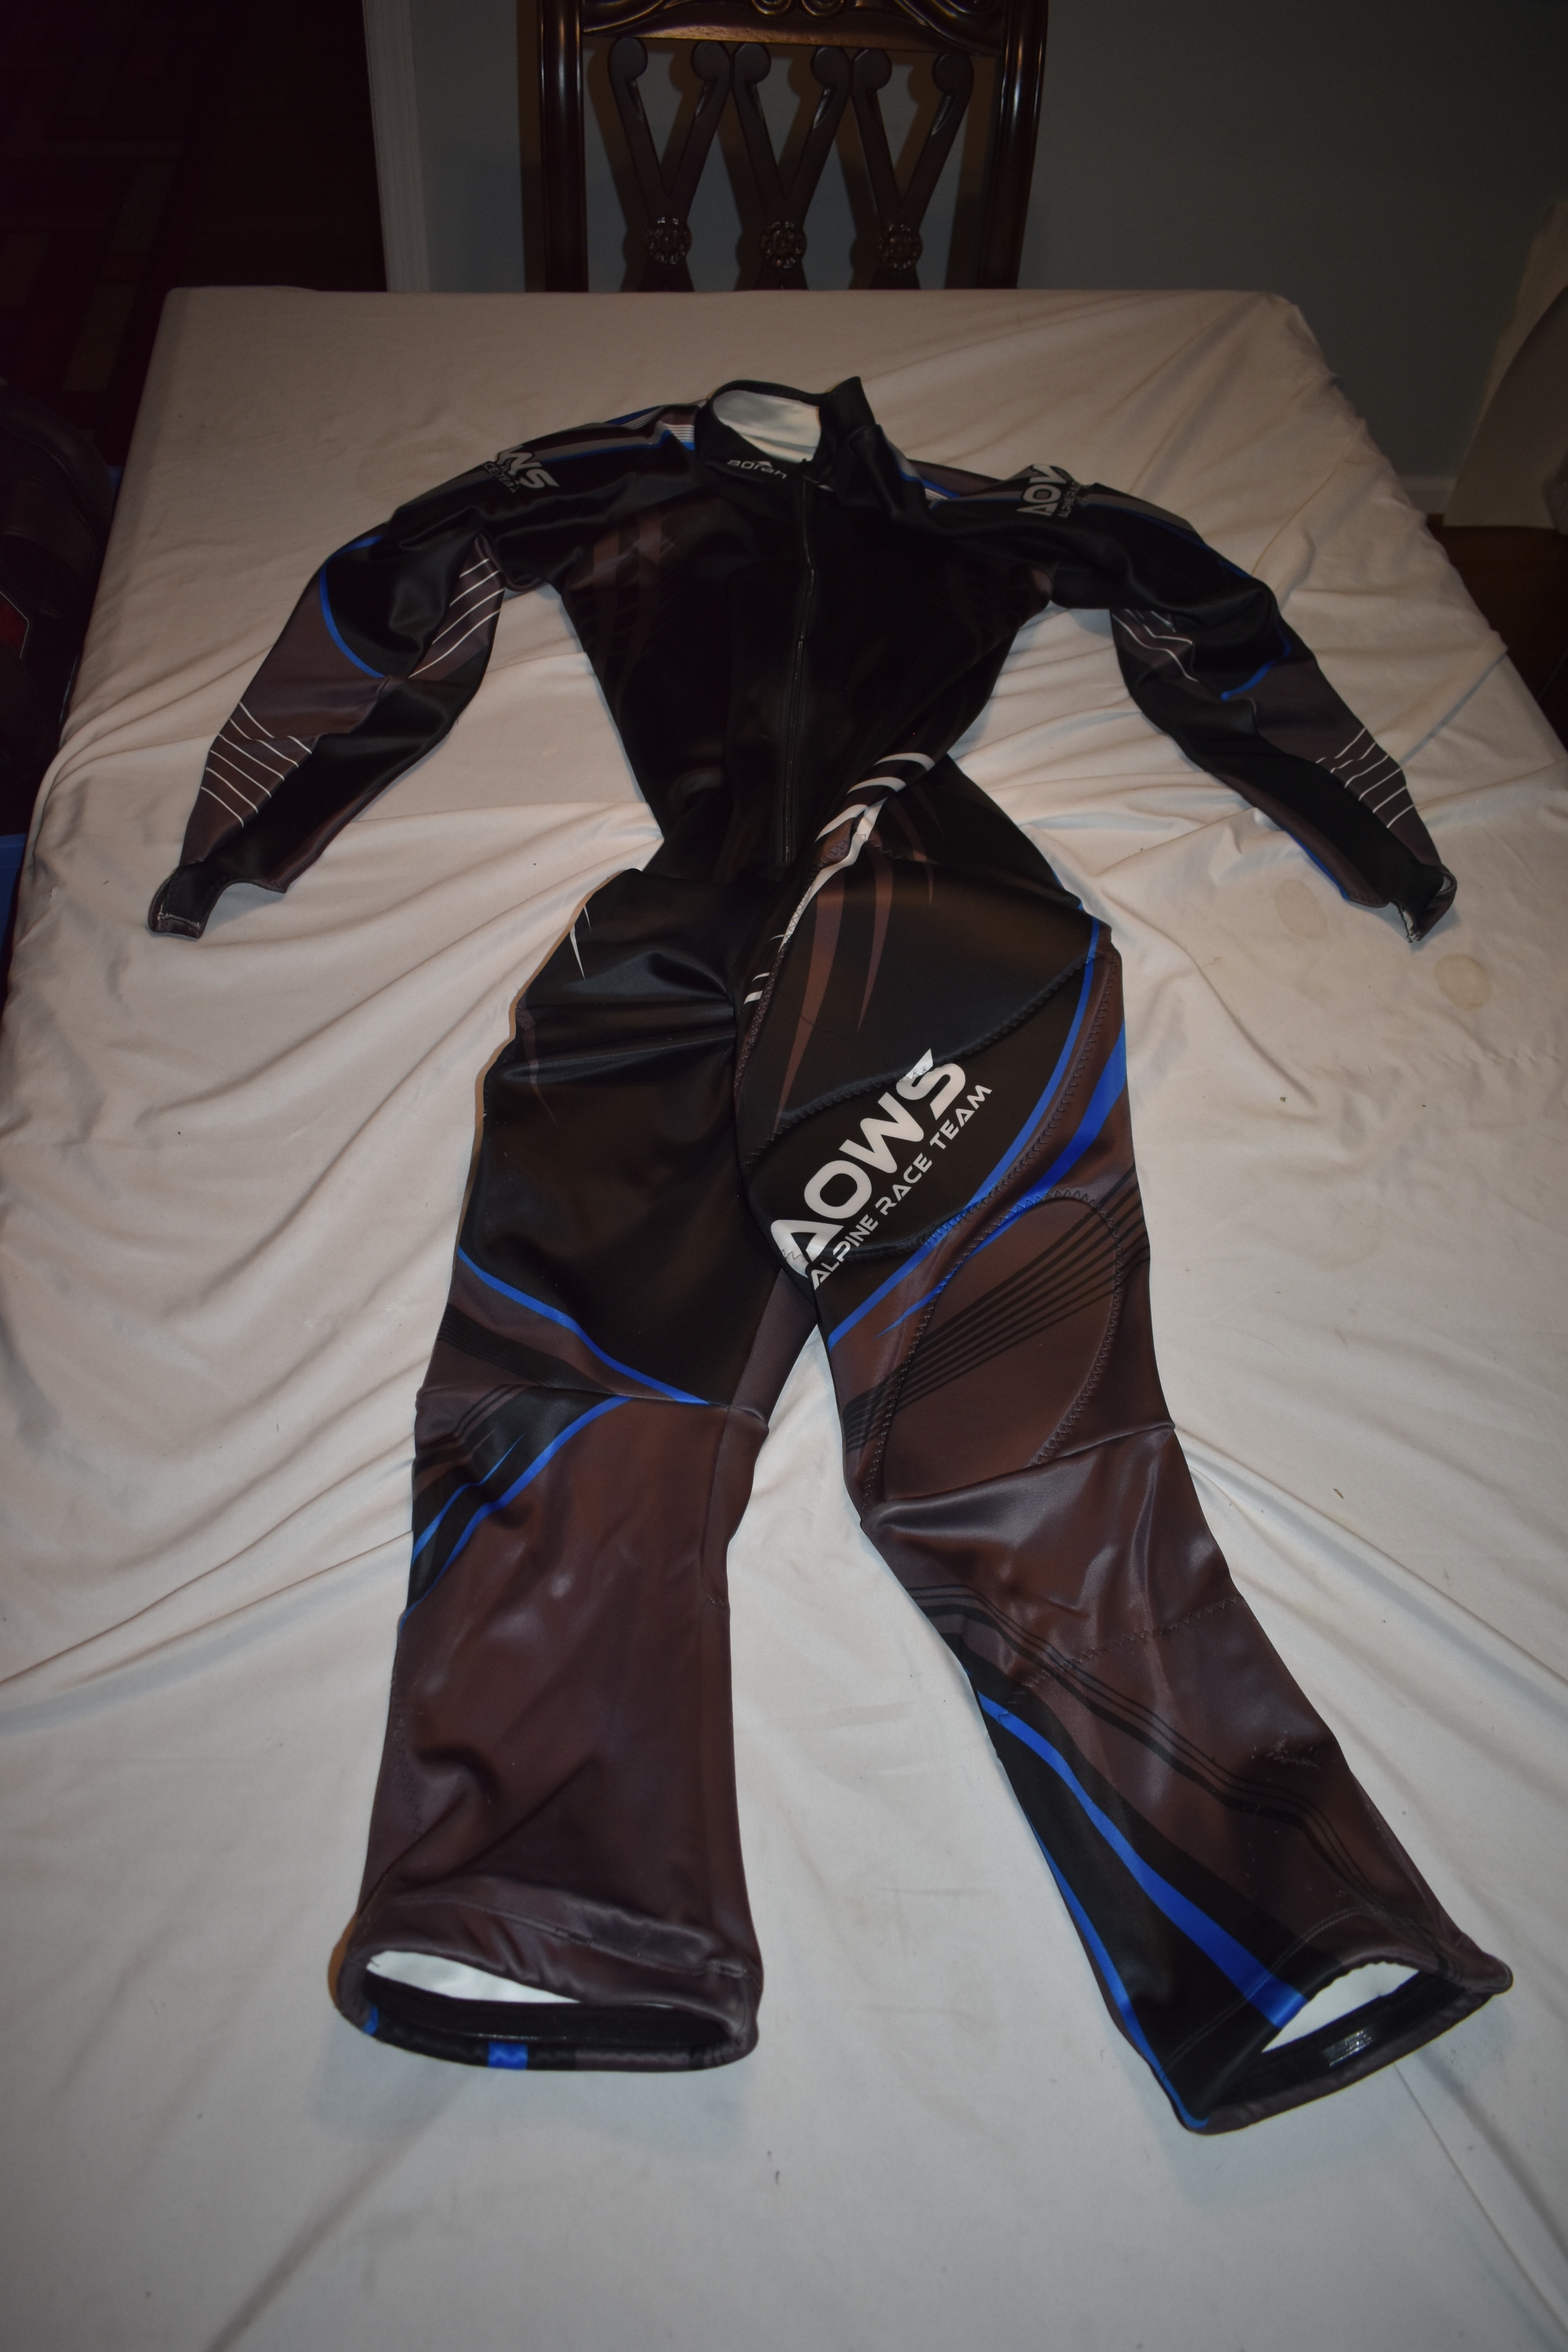 Borah Teamwear AOWS Pro Alpine Race Team Padded Ski Suit, 4X - Like New!